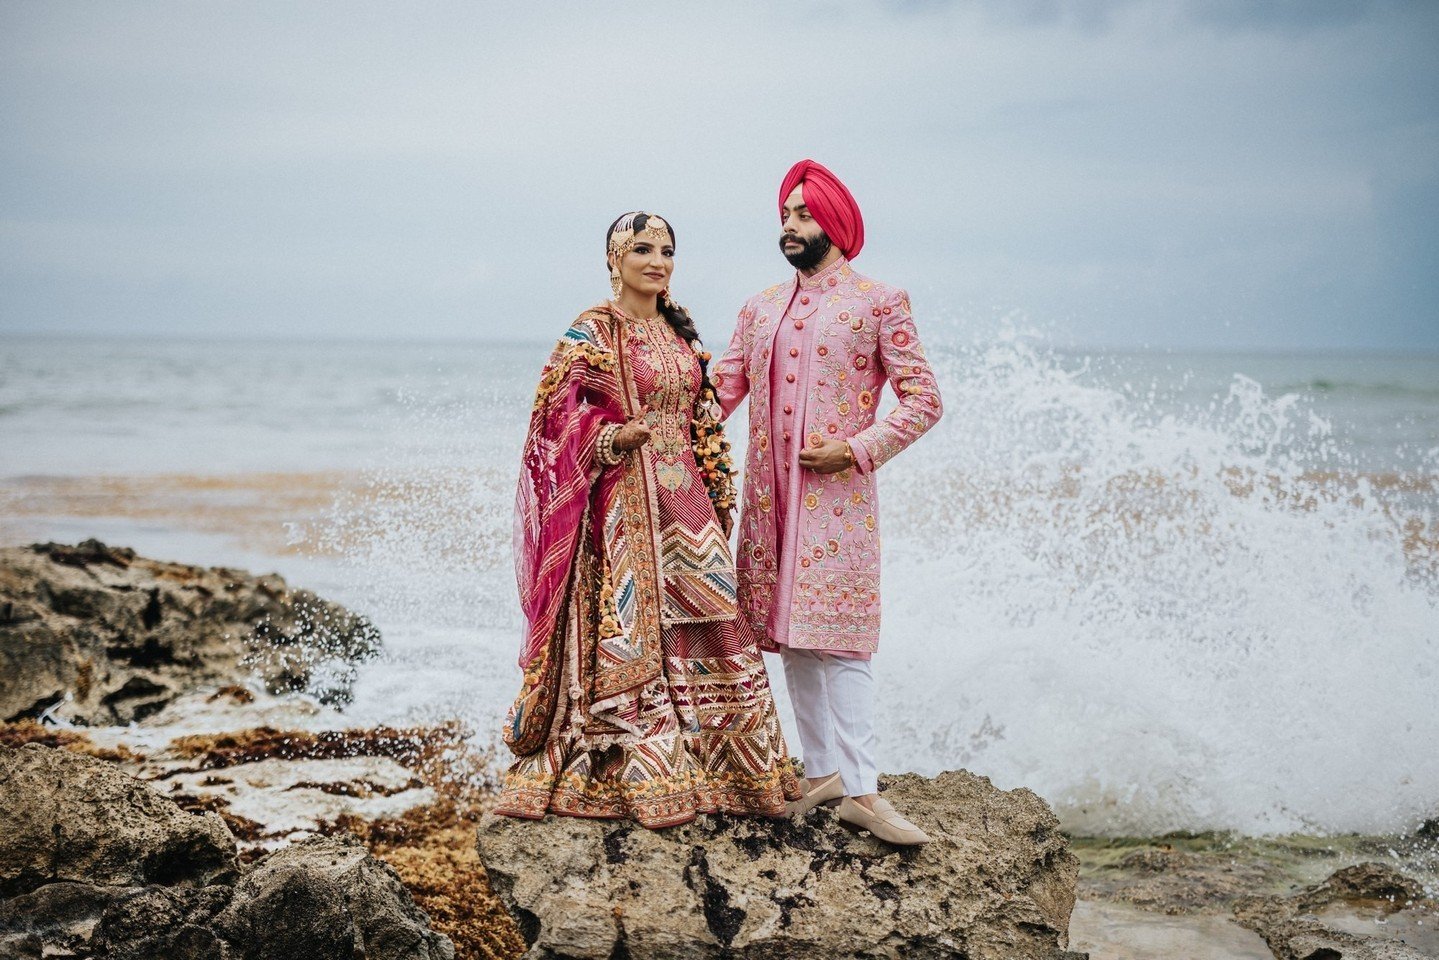 When the ocean gives you these amazing wedding portraits 😍 #HARMANtookAVow⁠ #PartnersinParadise ⁠
👰🤵 @harmankaur227 &amp; @avneet723⁠
🇲🇽 @shaadidestinations⁠
🧑&zwj;🎨 @jccastilloweddings⁠
🧑&zwj;🎨 @vianeypena.wp⁠
📸 @ptaufiqphotography⁠
💄 @sa